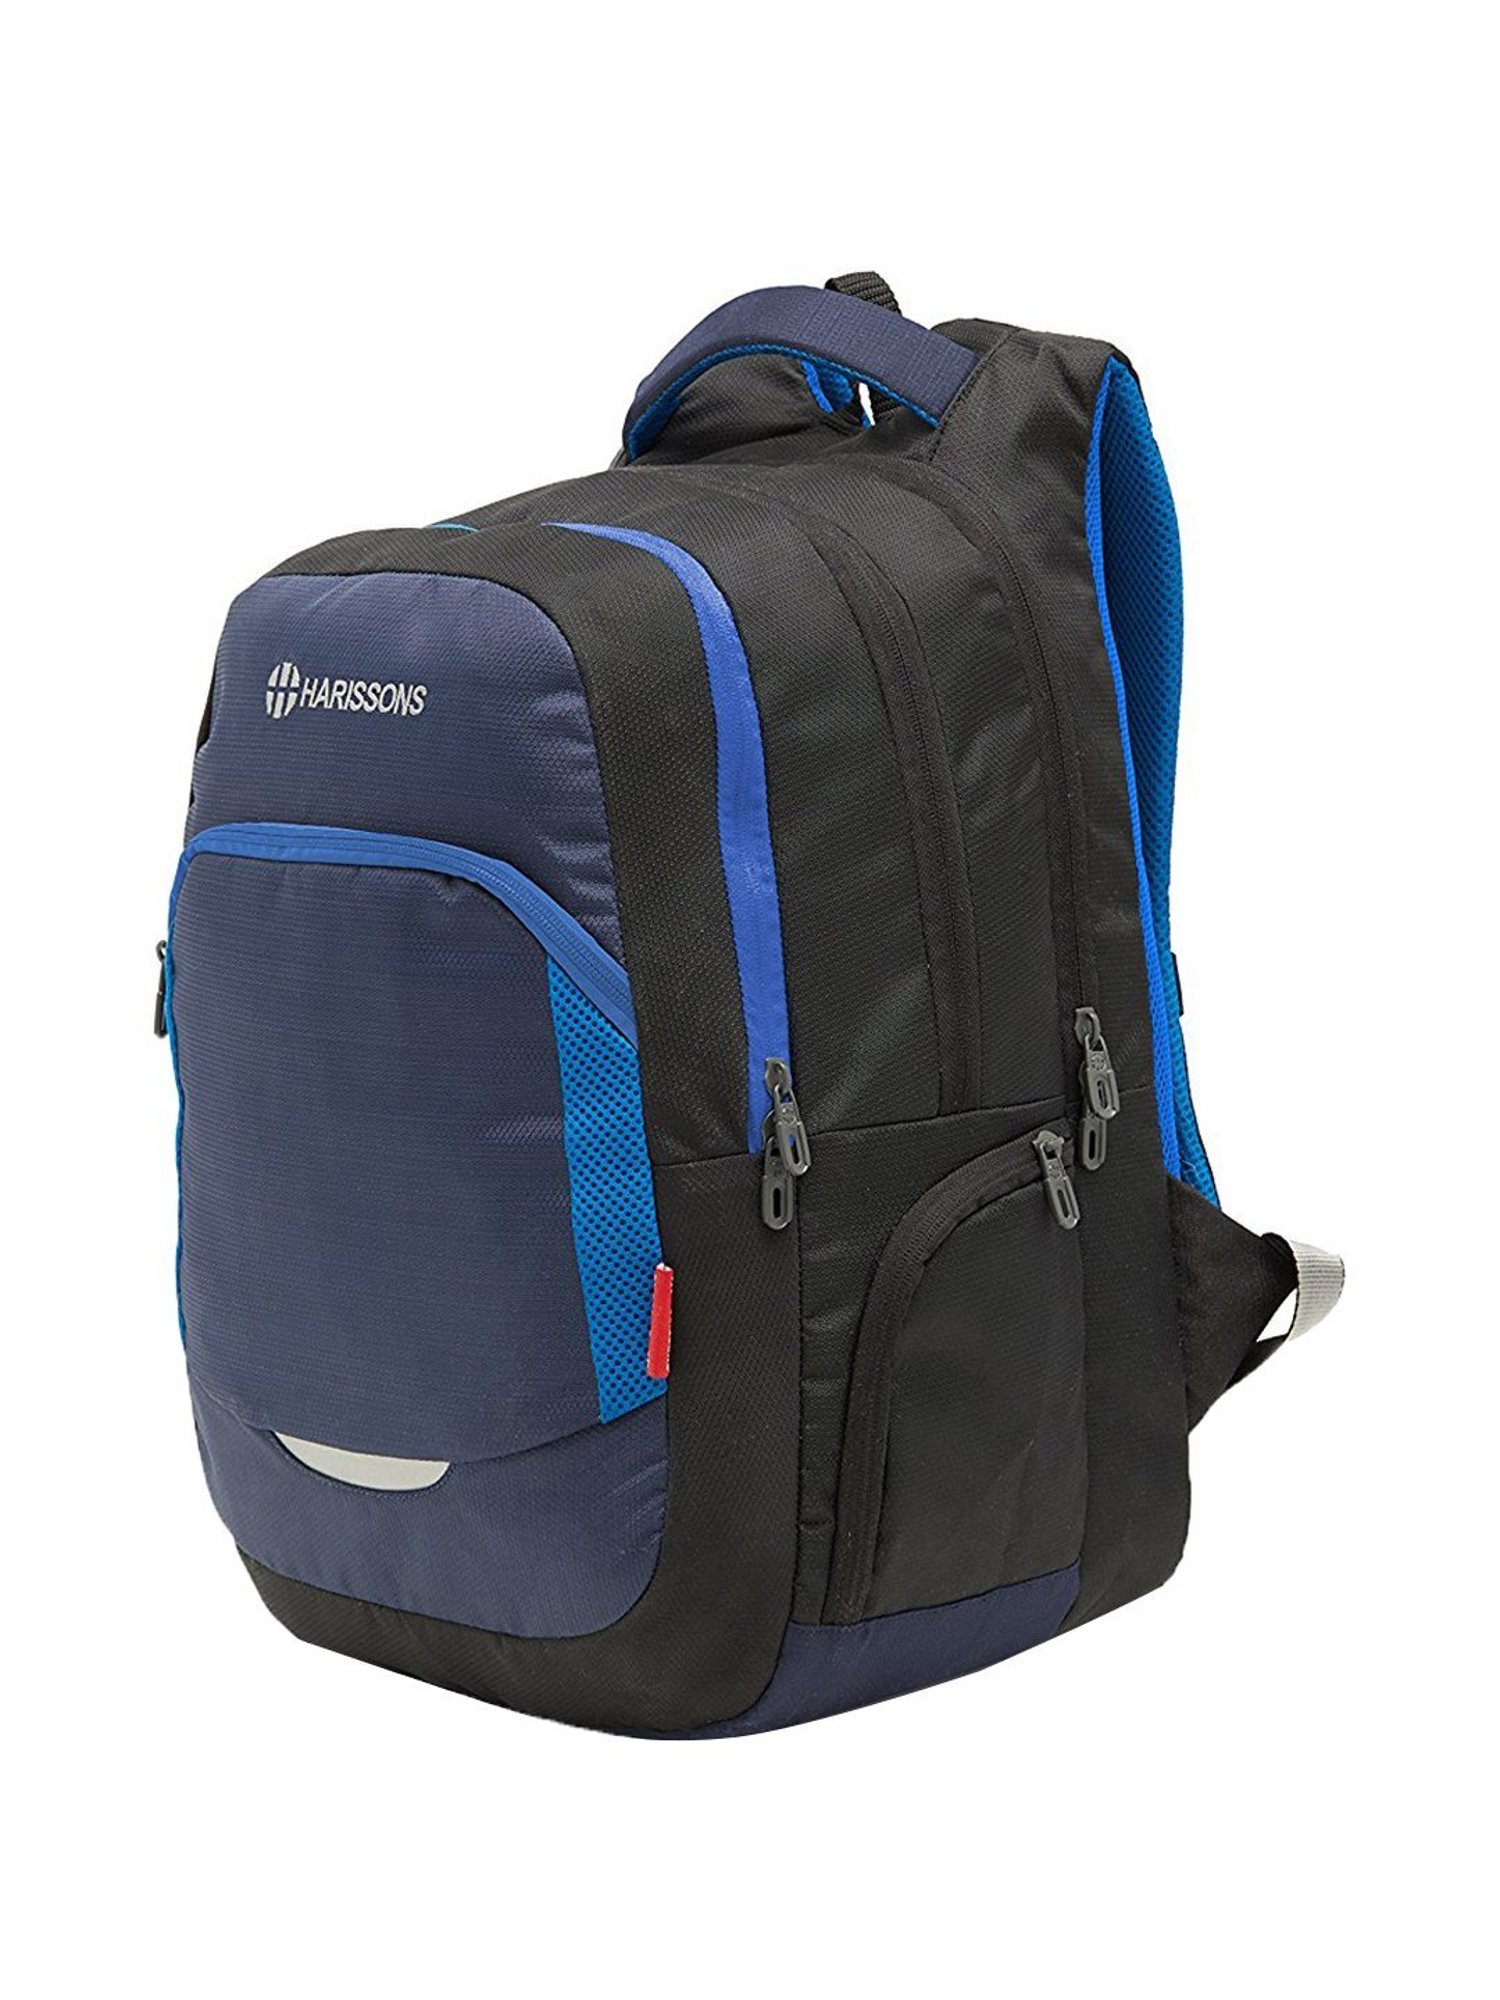 Harissons Travel Laptop Backpack (15.6